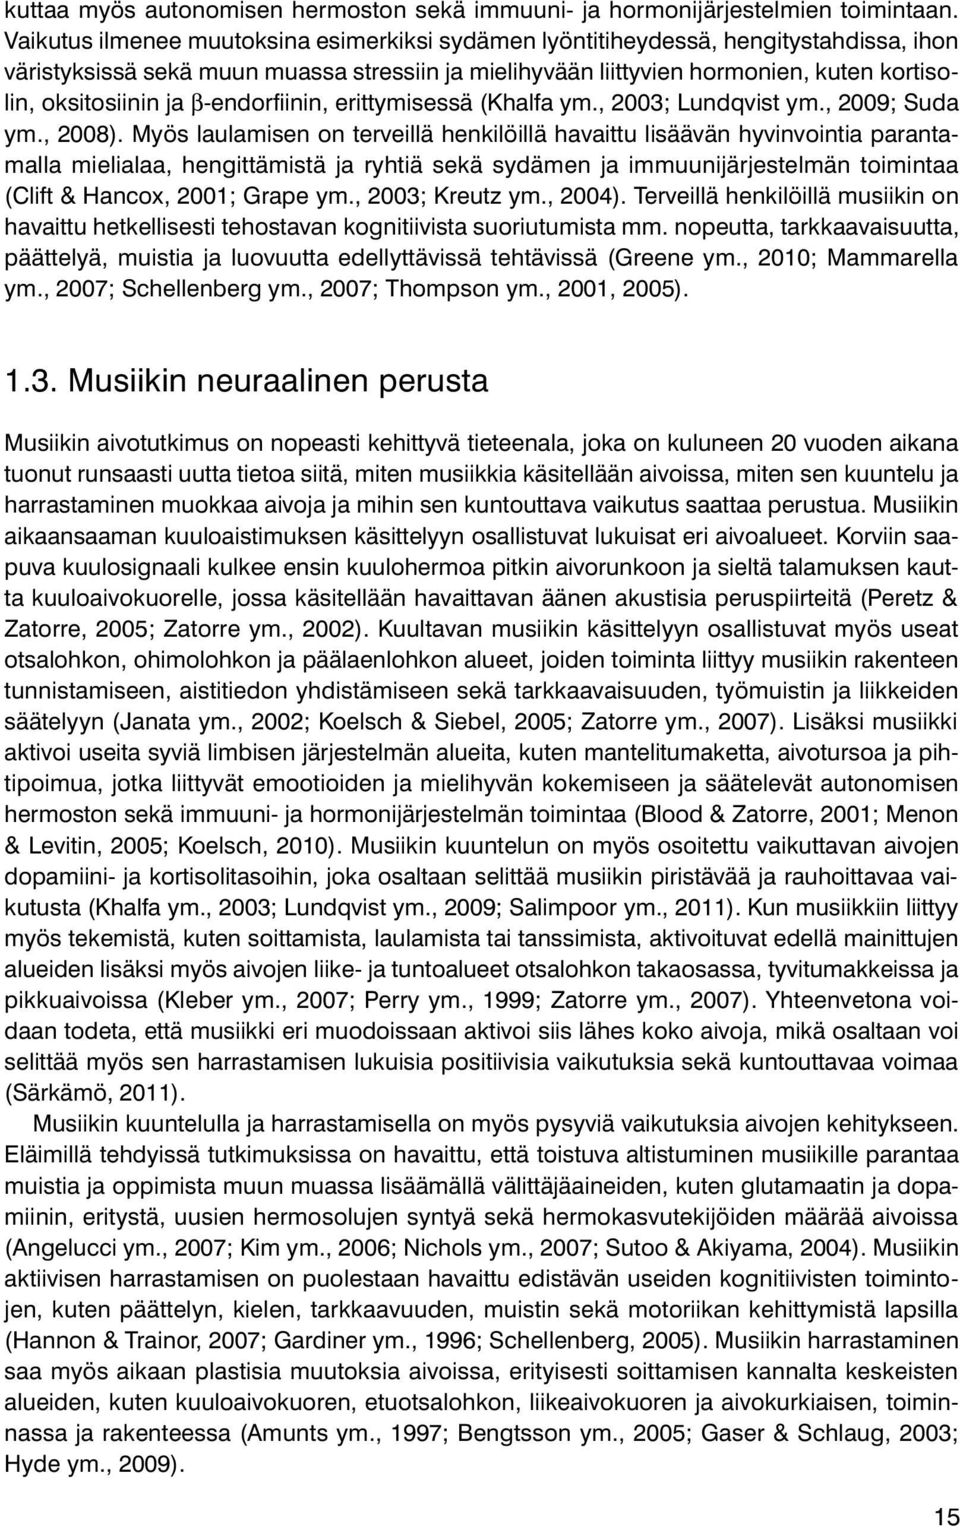 ja β-endorfiinin, erittymisessä (Khalfa ym., 2003; Lundqvist ym., 2009; Suda ym., 2008).